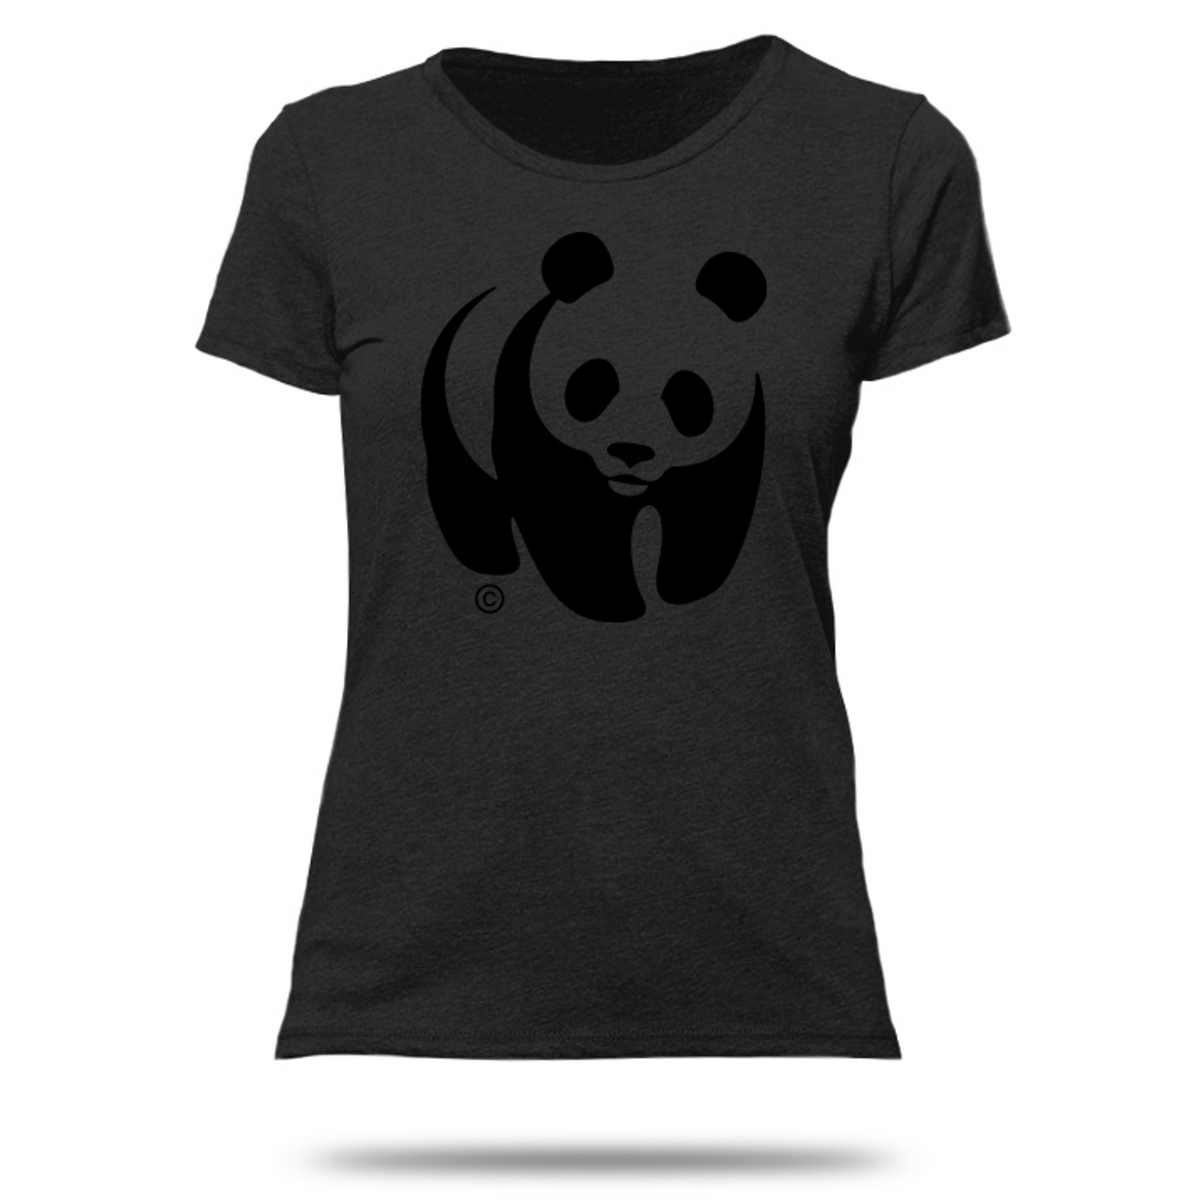 Cotton Casual Wear Evolove Women's Bold Black Round Neck Panda